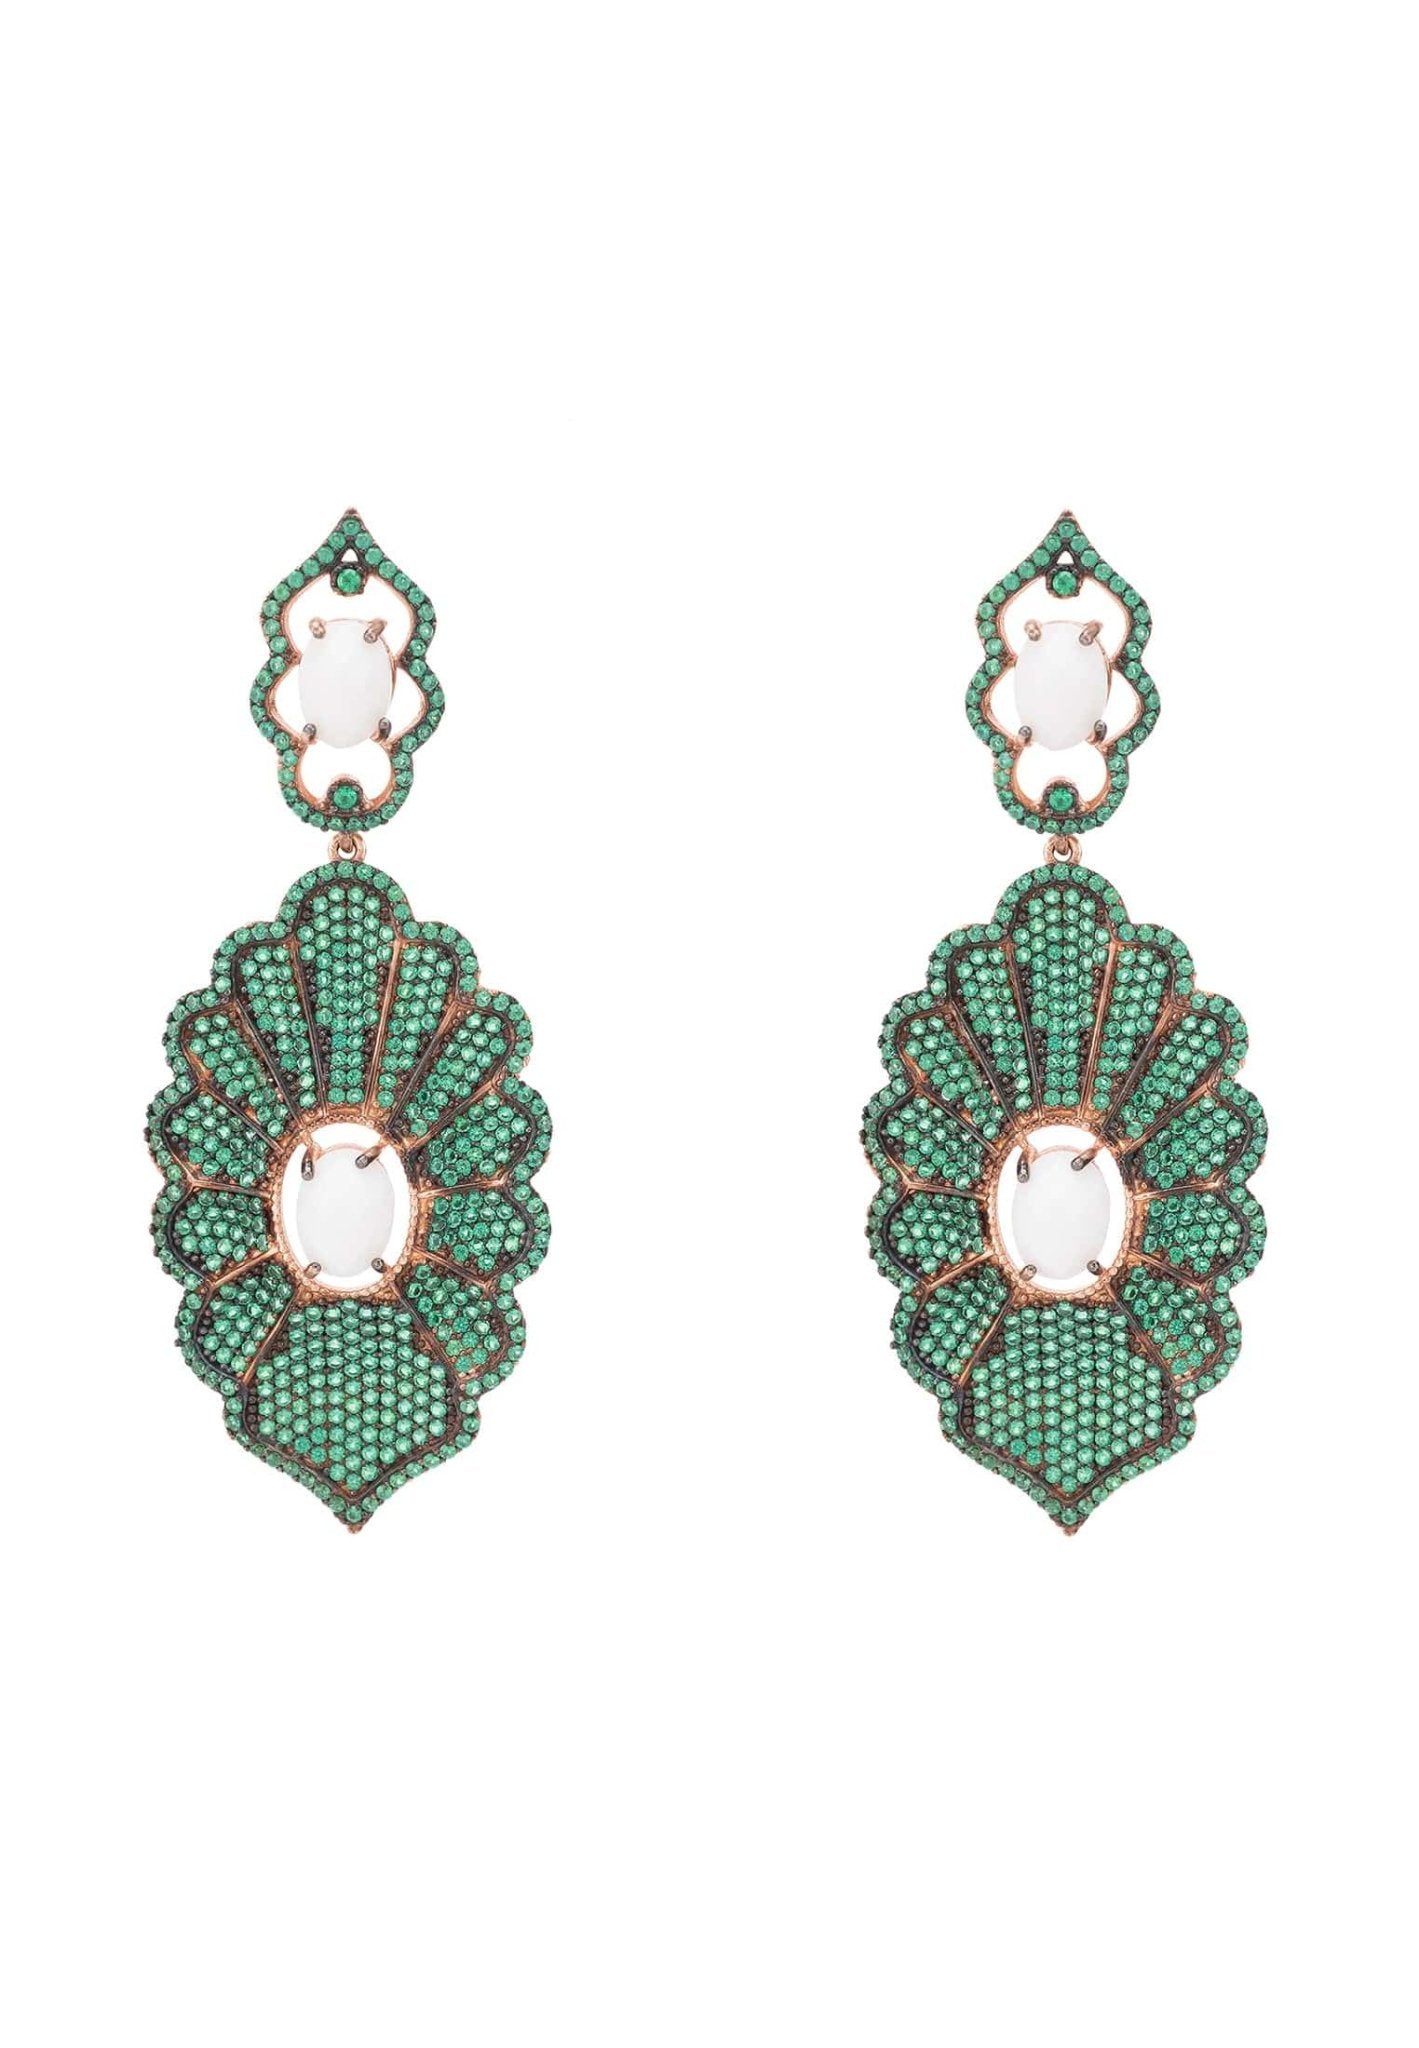 Danbury Earrings Green Rosegold - LATELITA Earrings